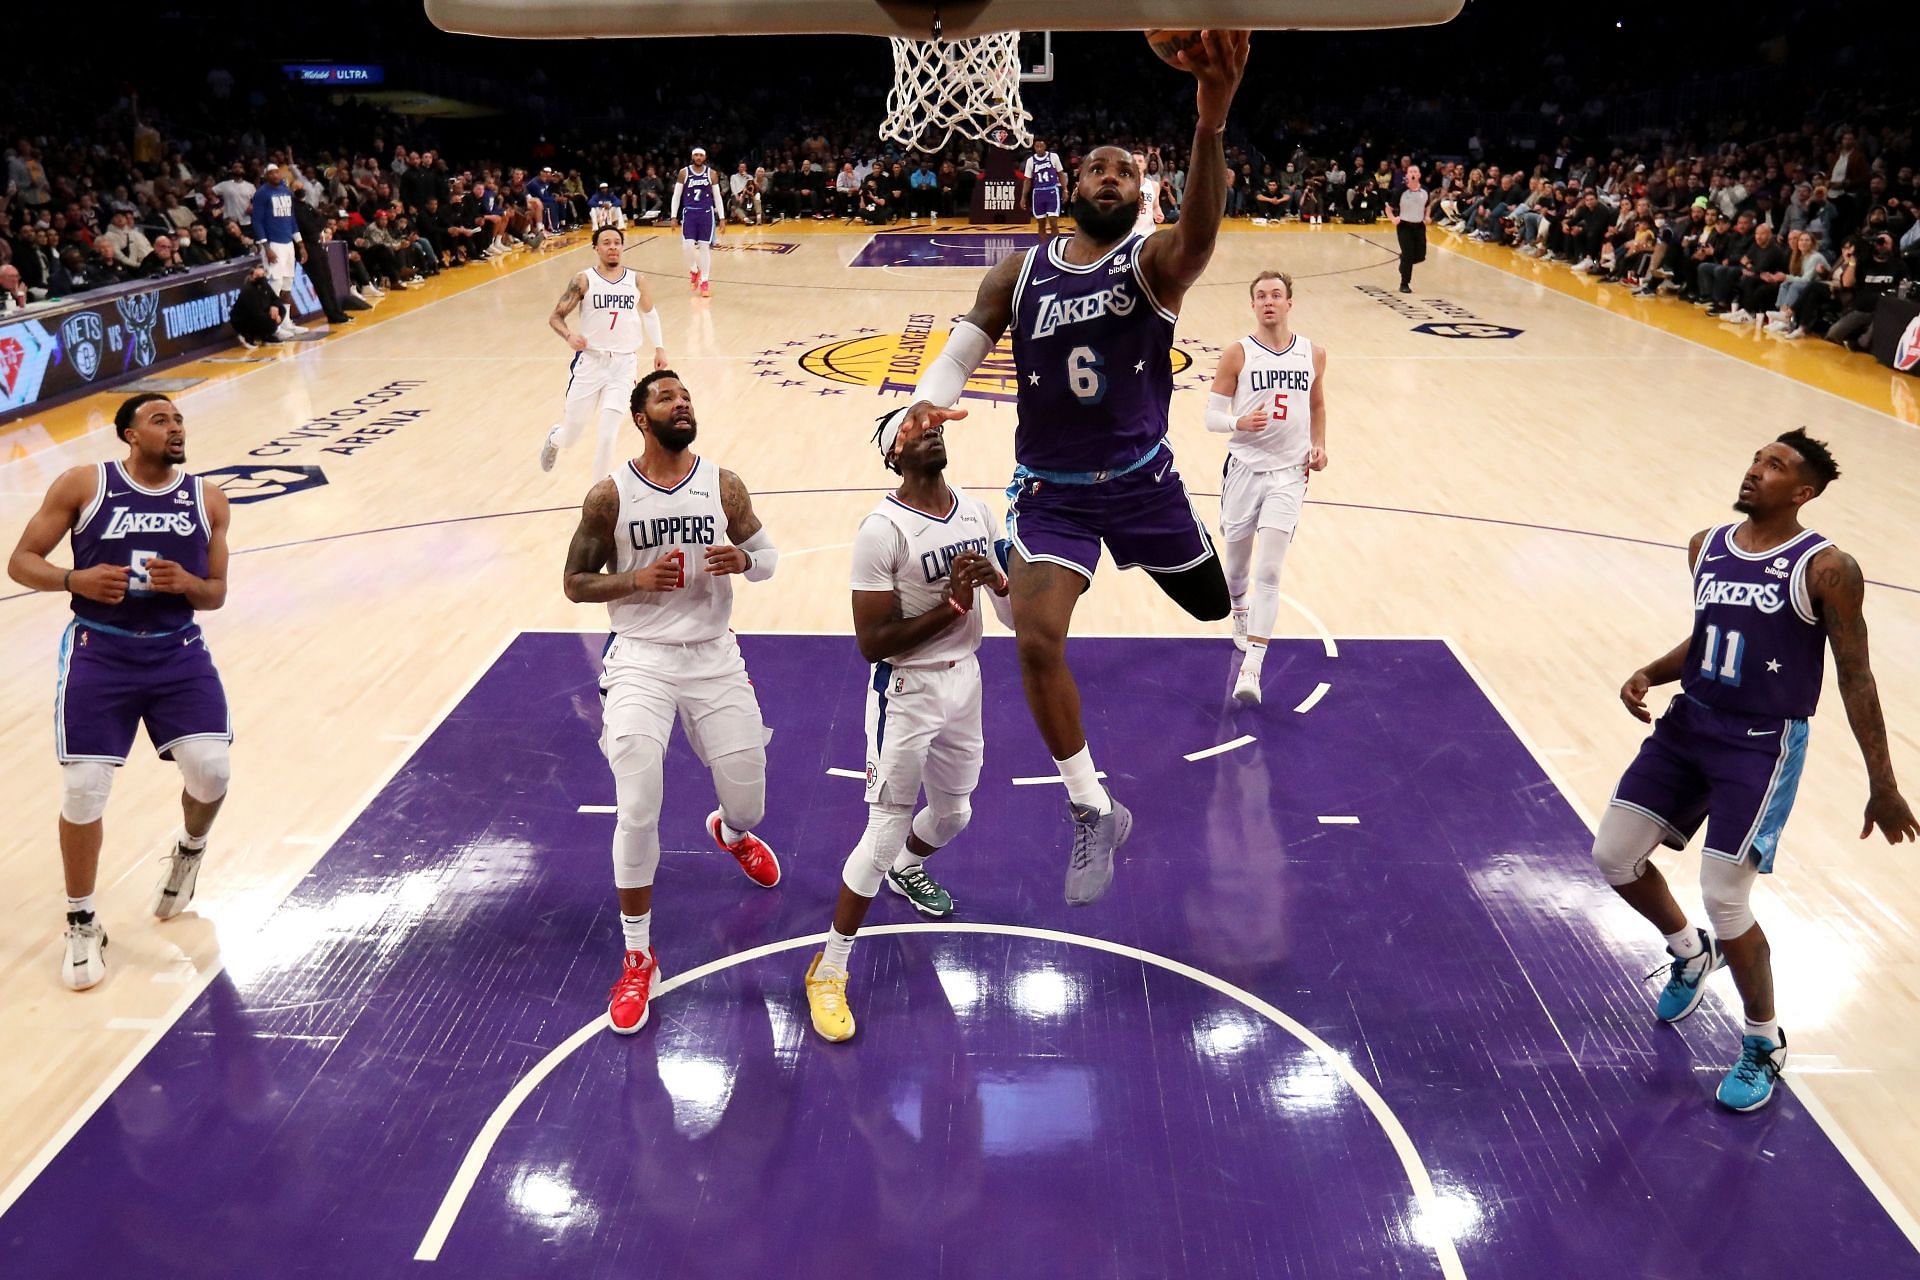 LA Lakers forward LeBron James drives against the LA Clippers.